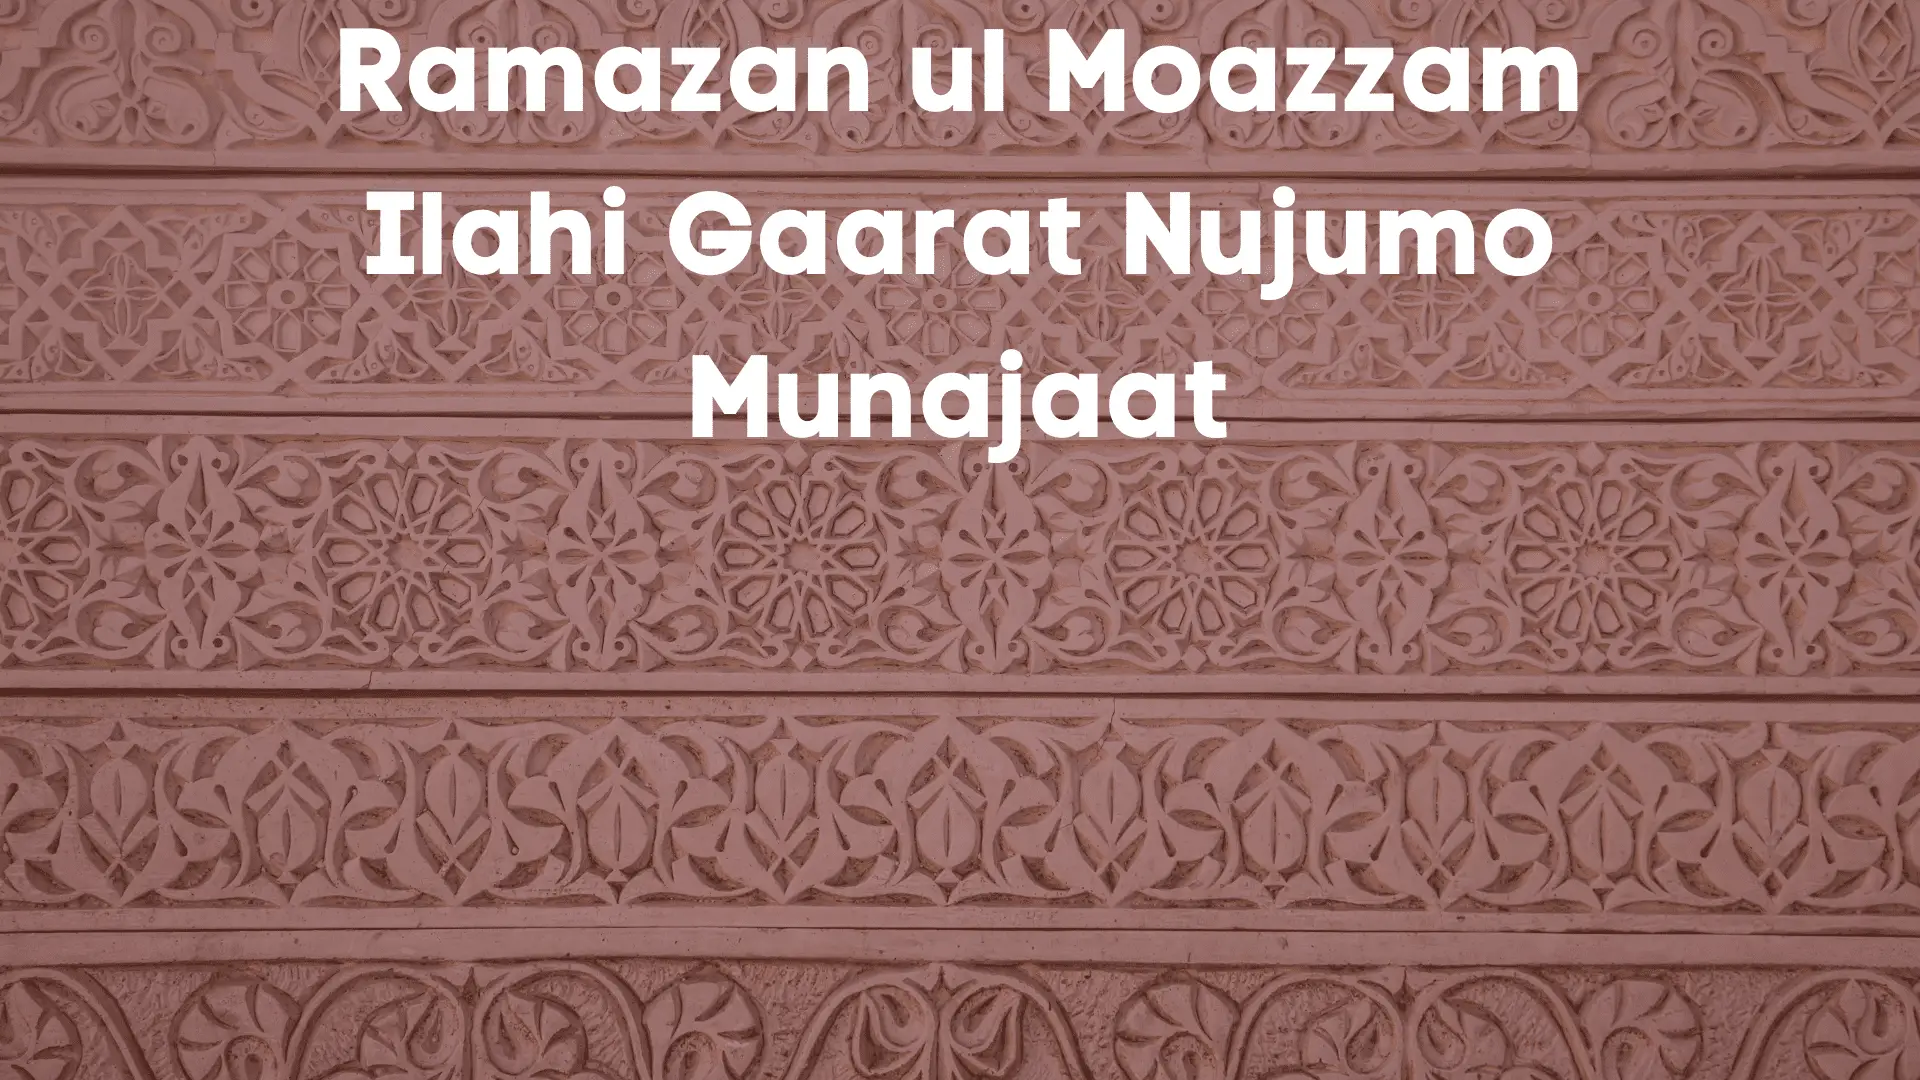 Ramazan ul Moazzam Ilahi Gaarat Nujumo Munajaat